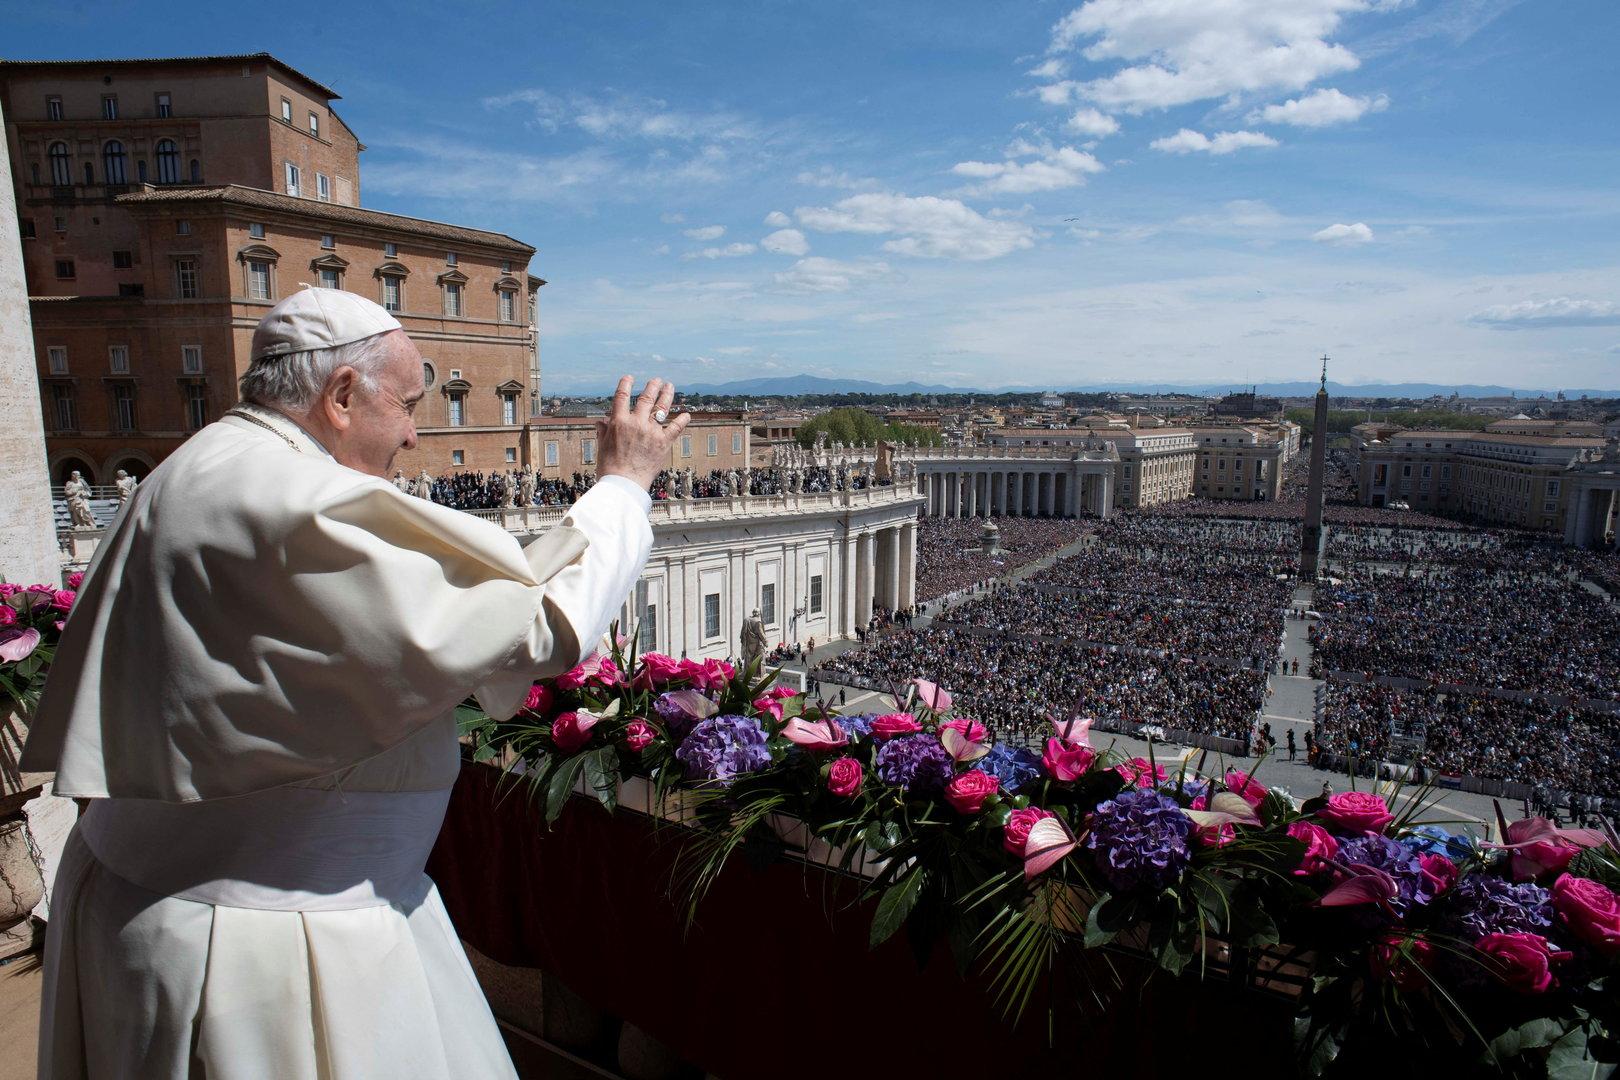 Wer vertritt den kranken Papst Franziskus, wenn er zu Ostern ausfällt?